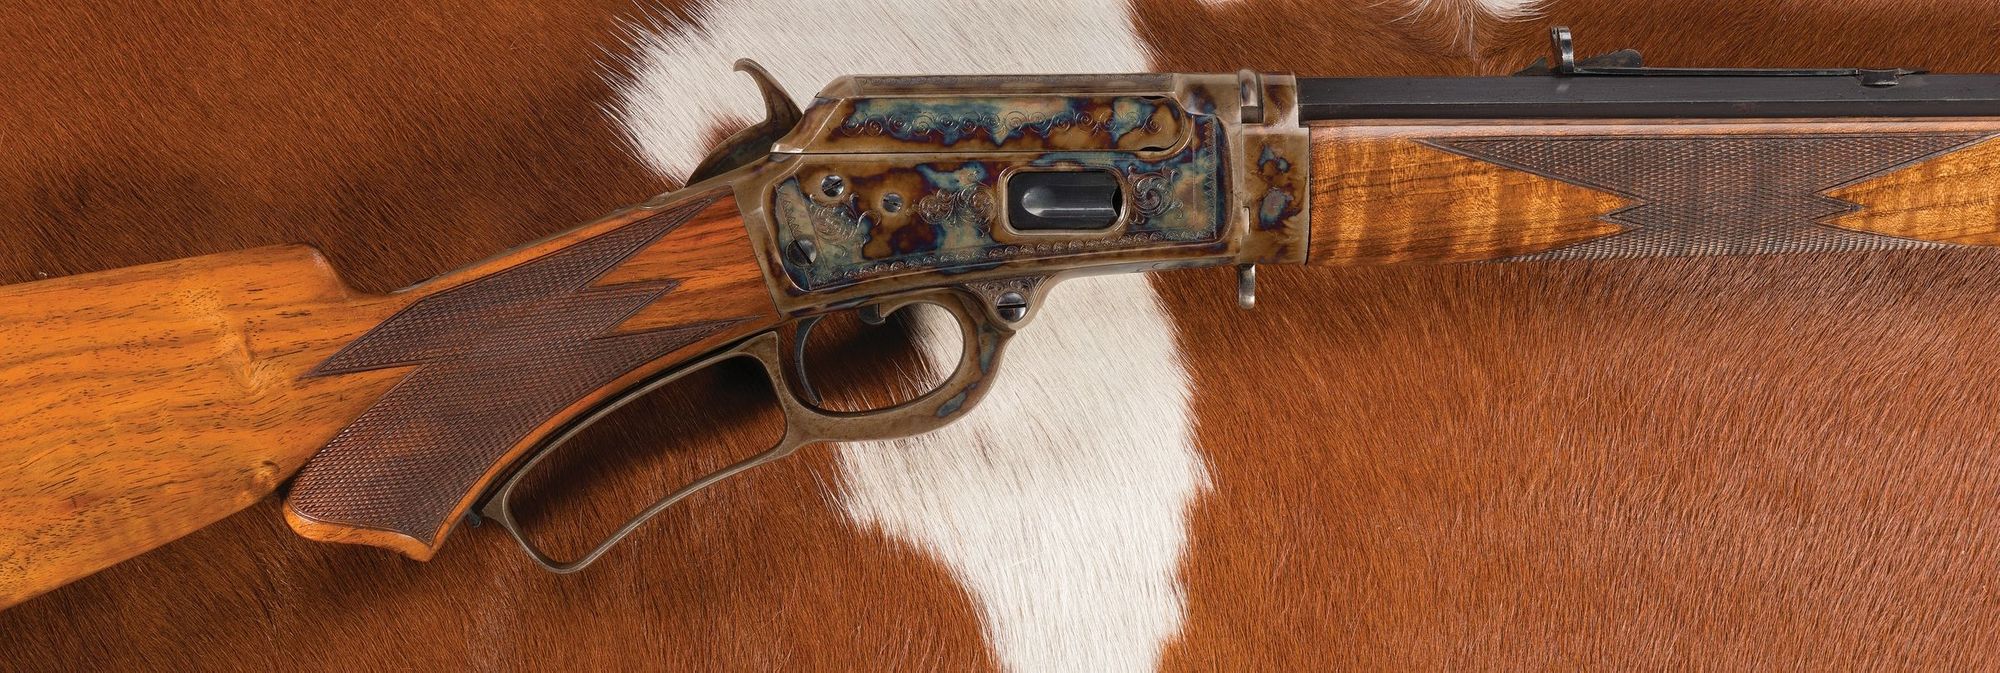 The Last Marlin 1889 takedwn rifle